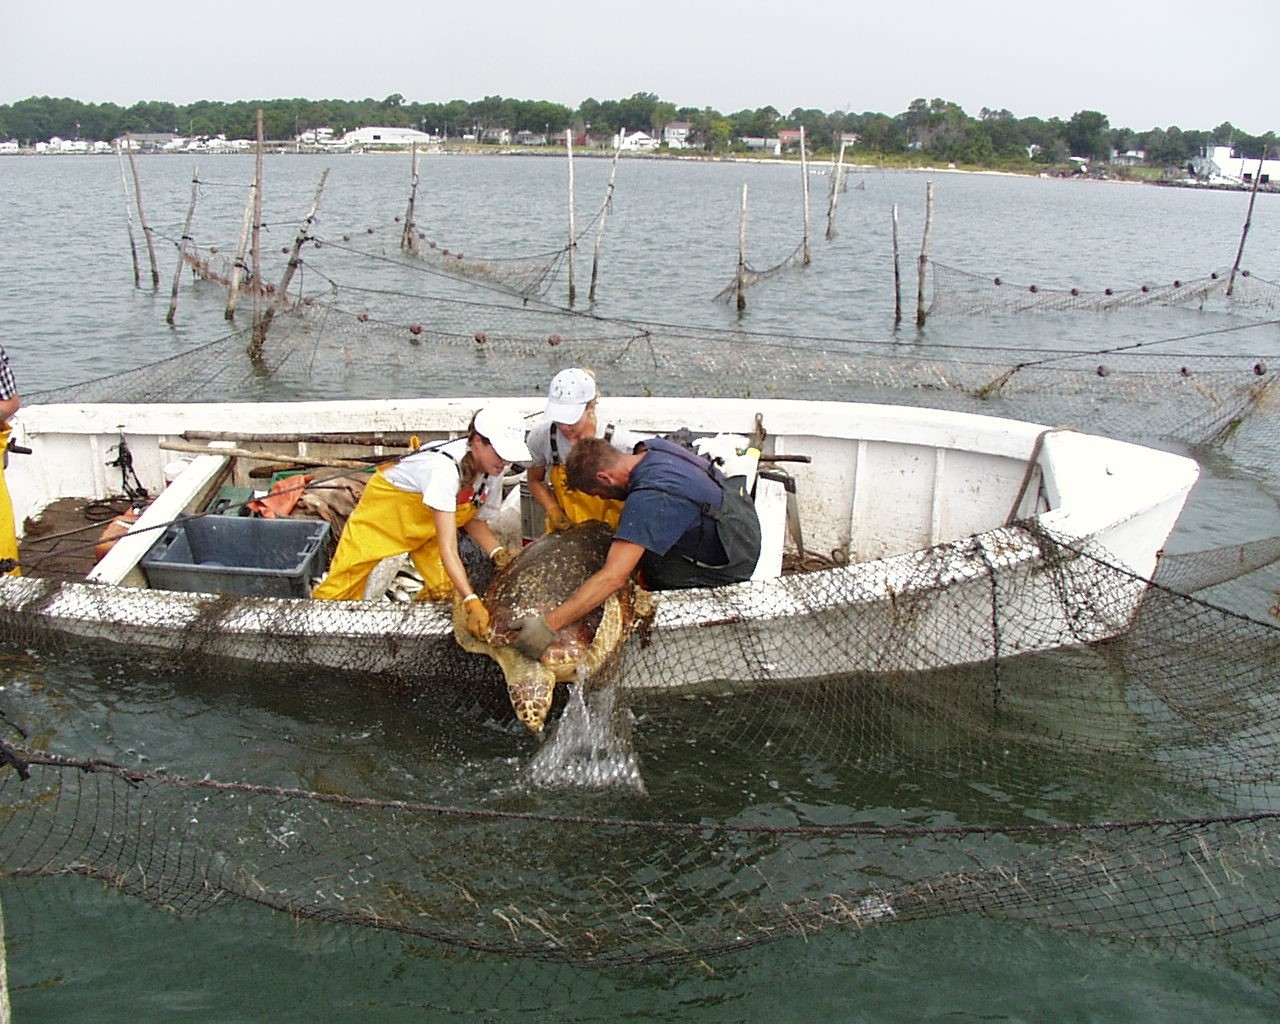 Three people in a boat hauling in a net